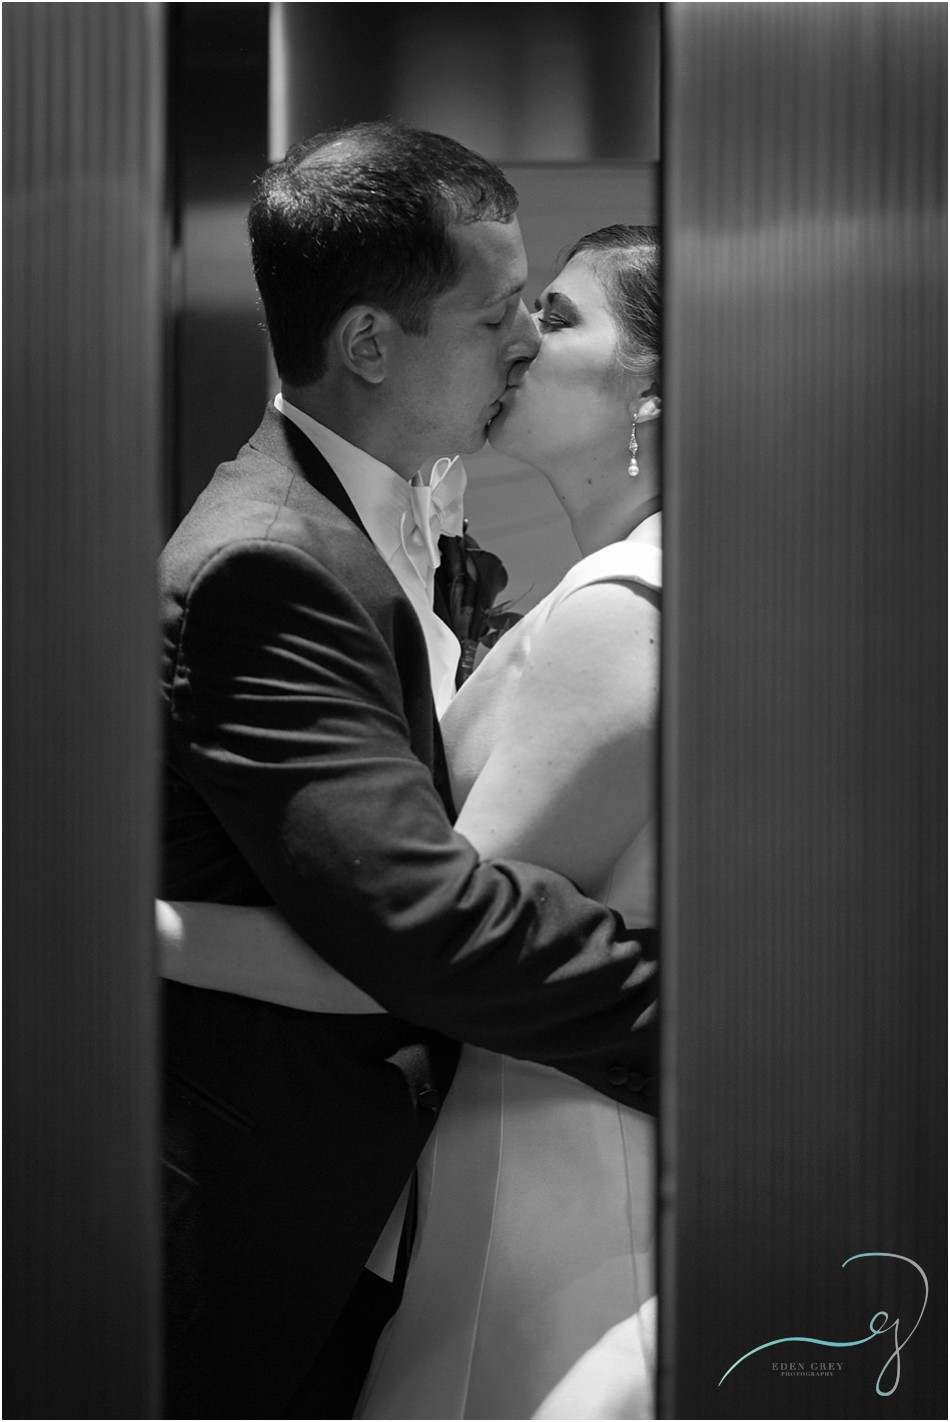 The Intimate Wedding Exit, Wedding sendoff